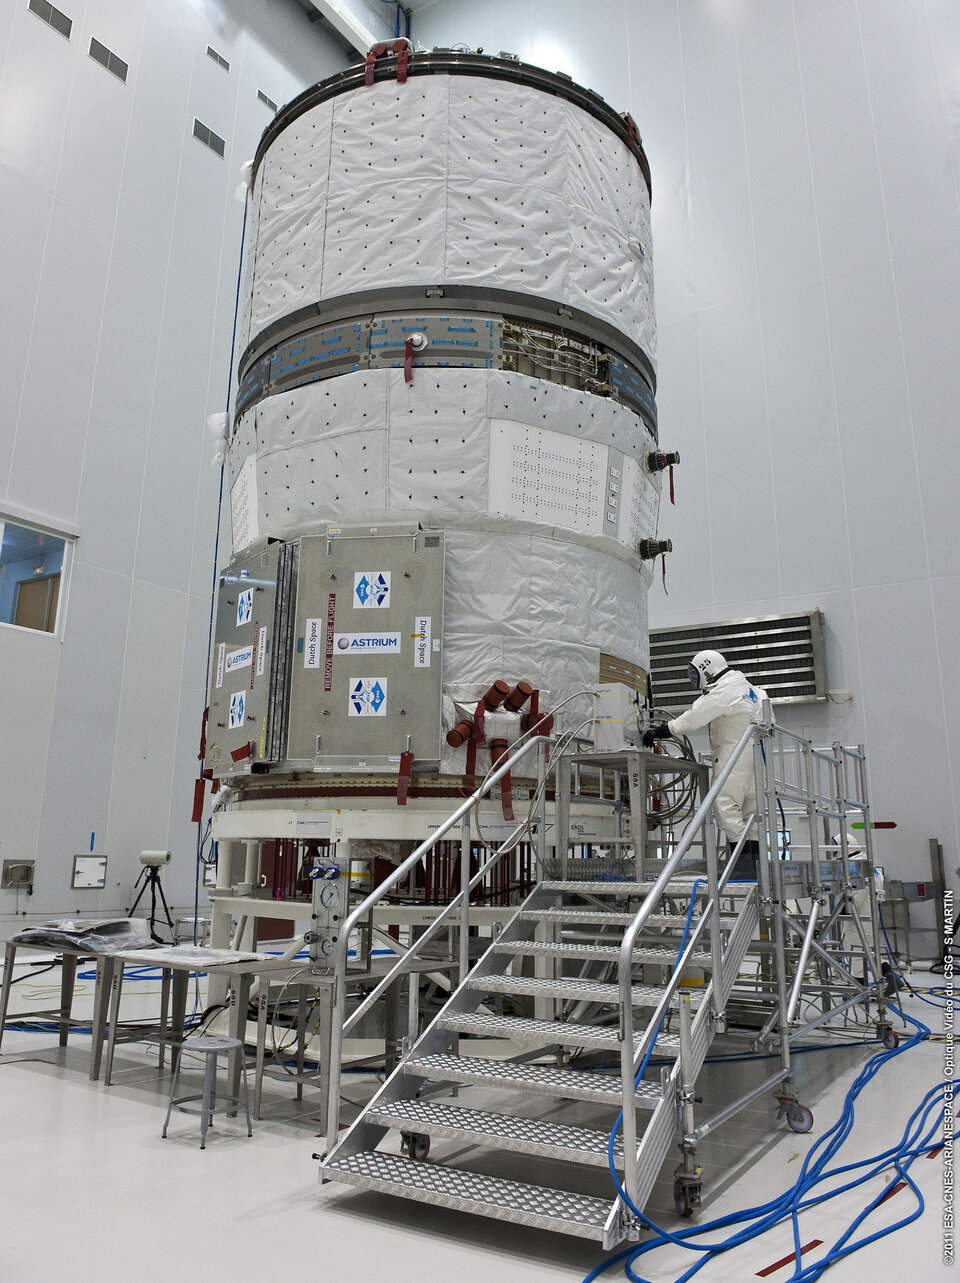 ATV Kepler tanking up, 10 January 2011